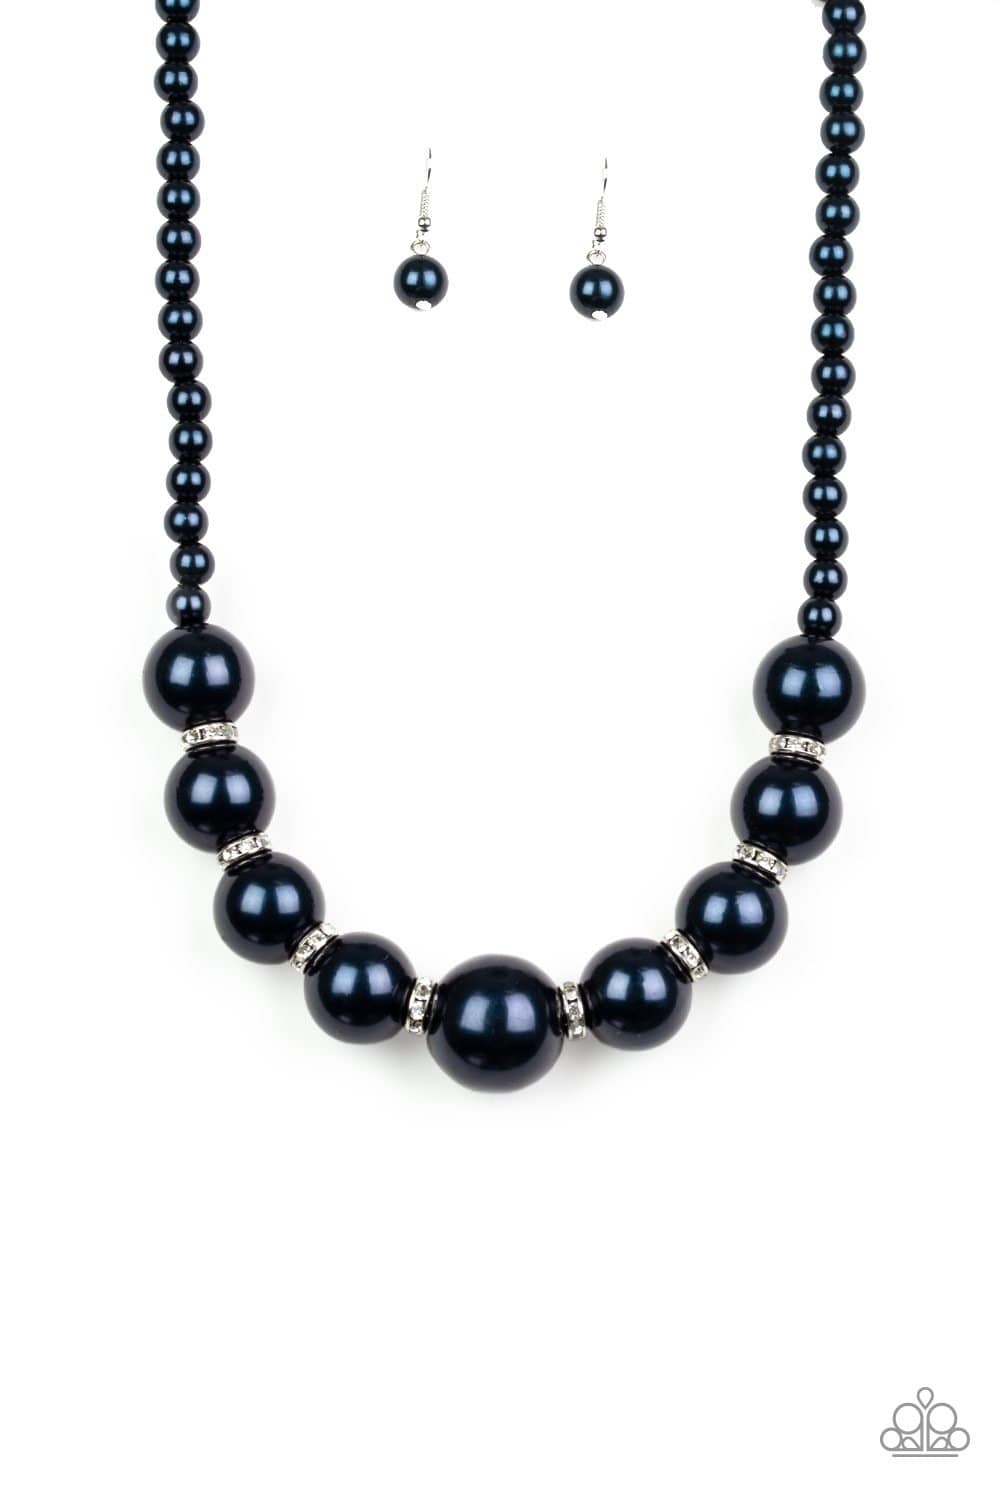 SoHo Socialite - Blue Pearl Necklace - Paparazzi Accessories - GlaMarous Titi Jewels